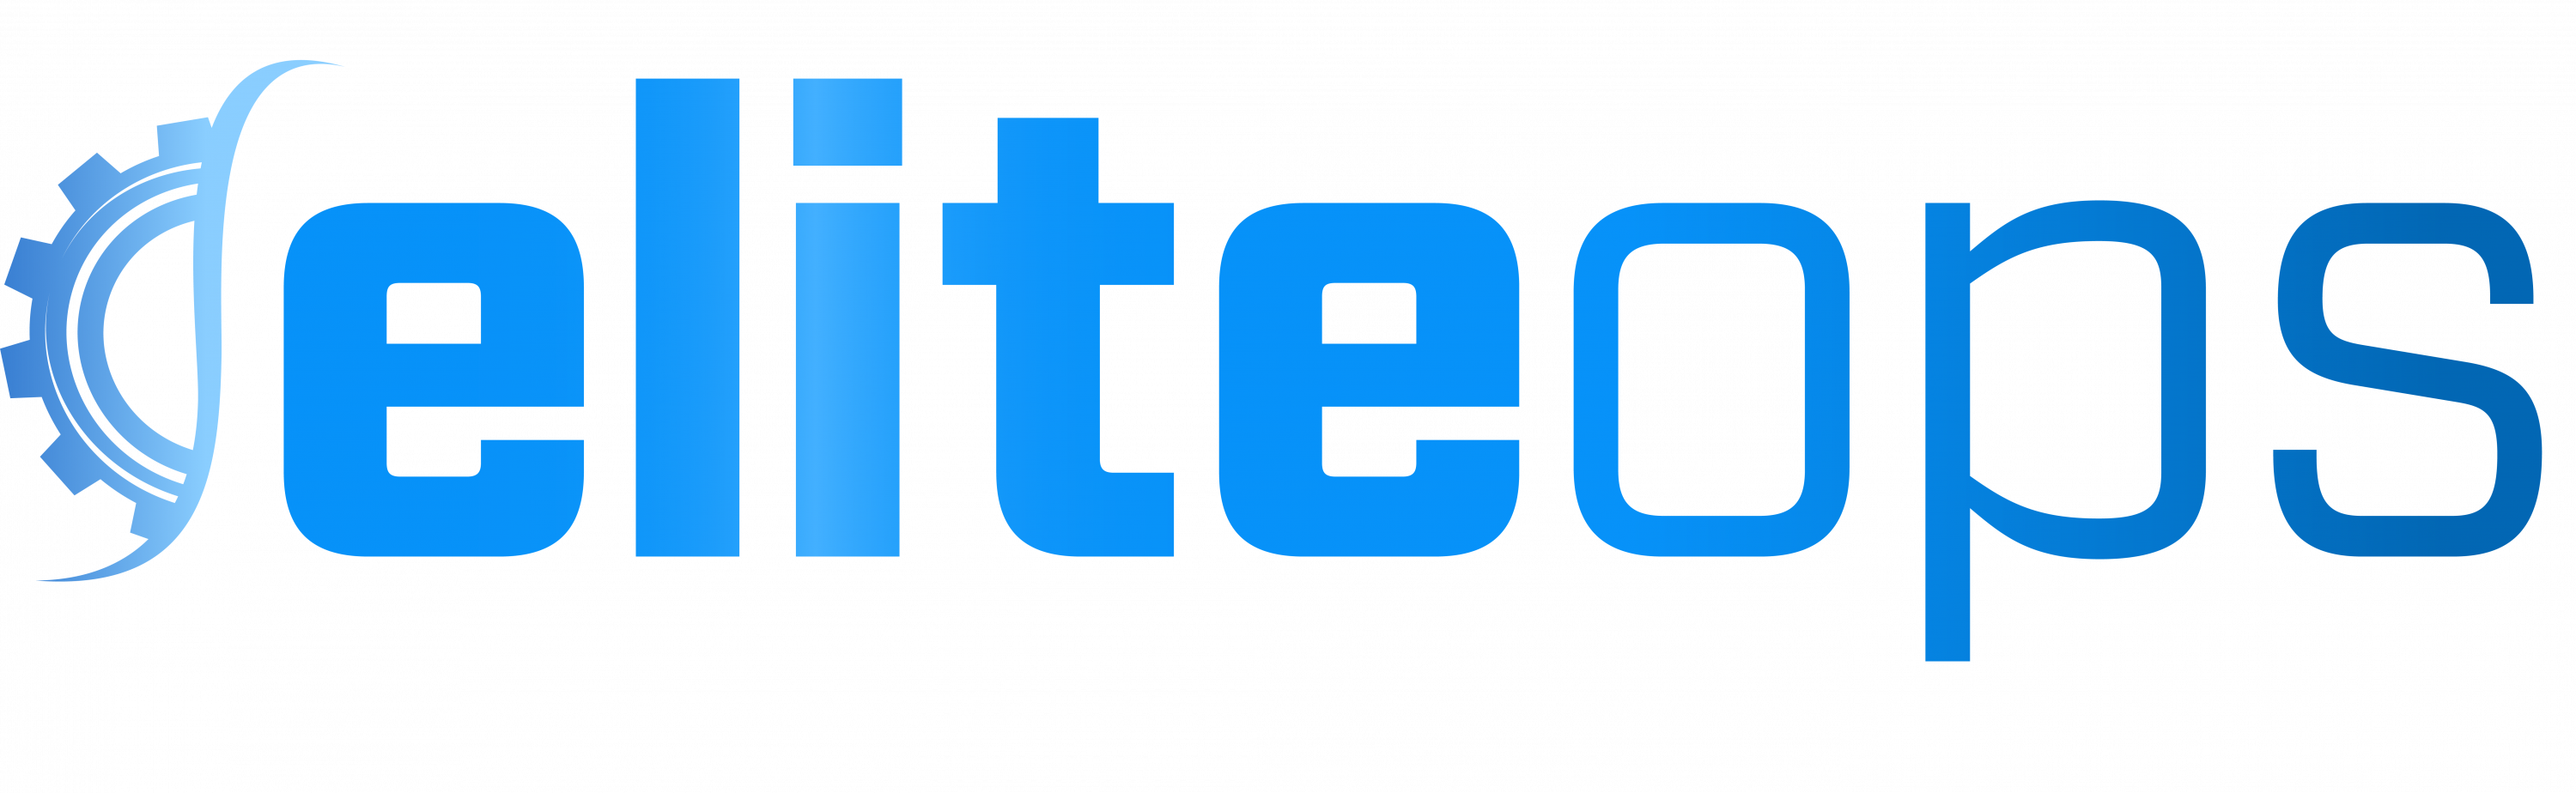 eliteops logo